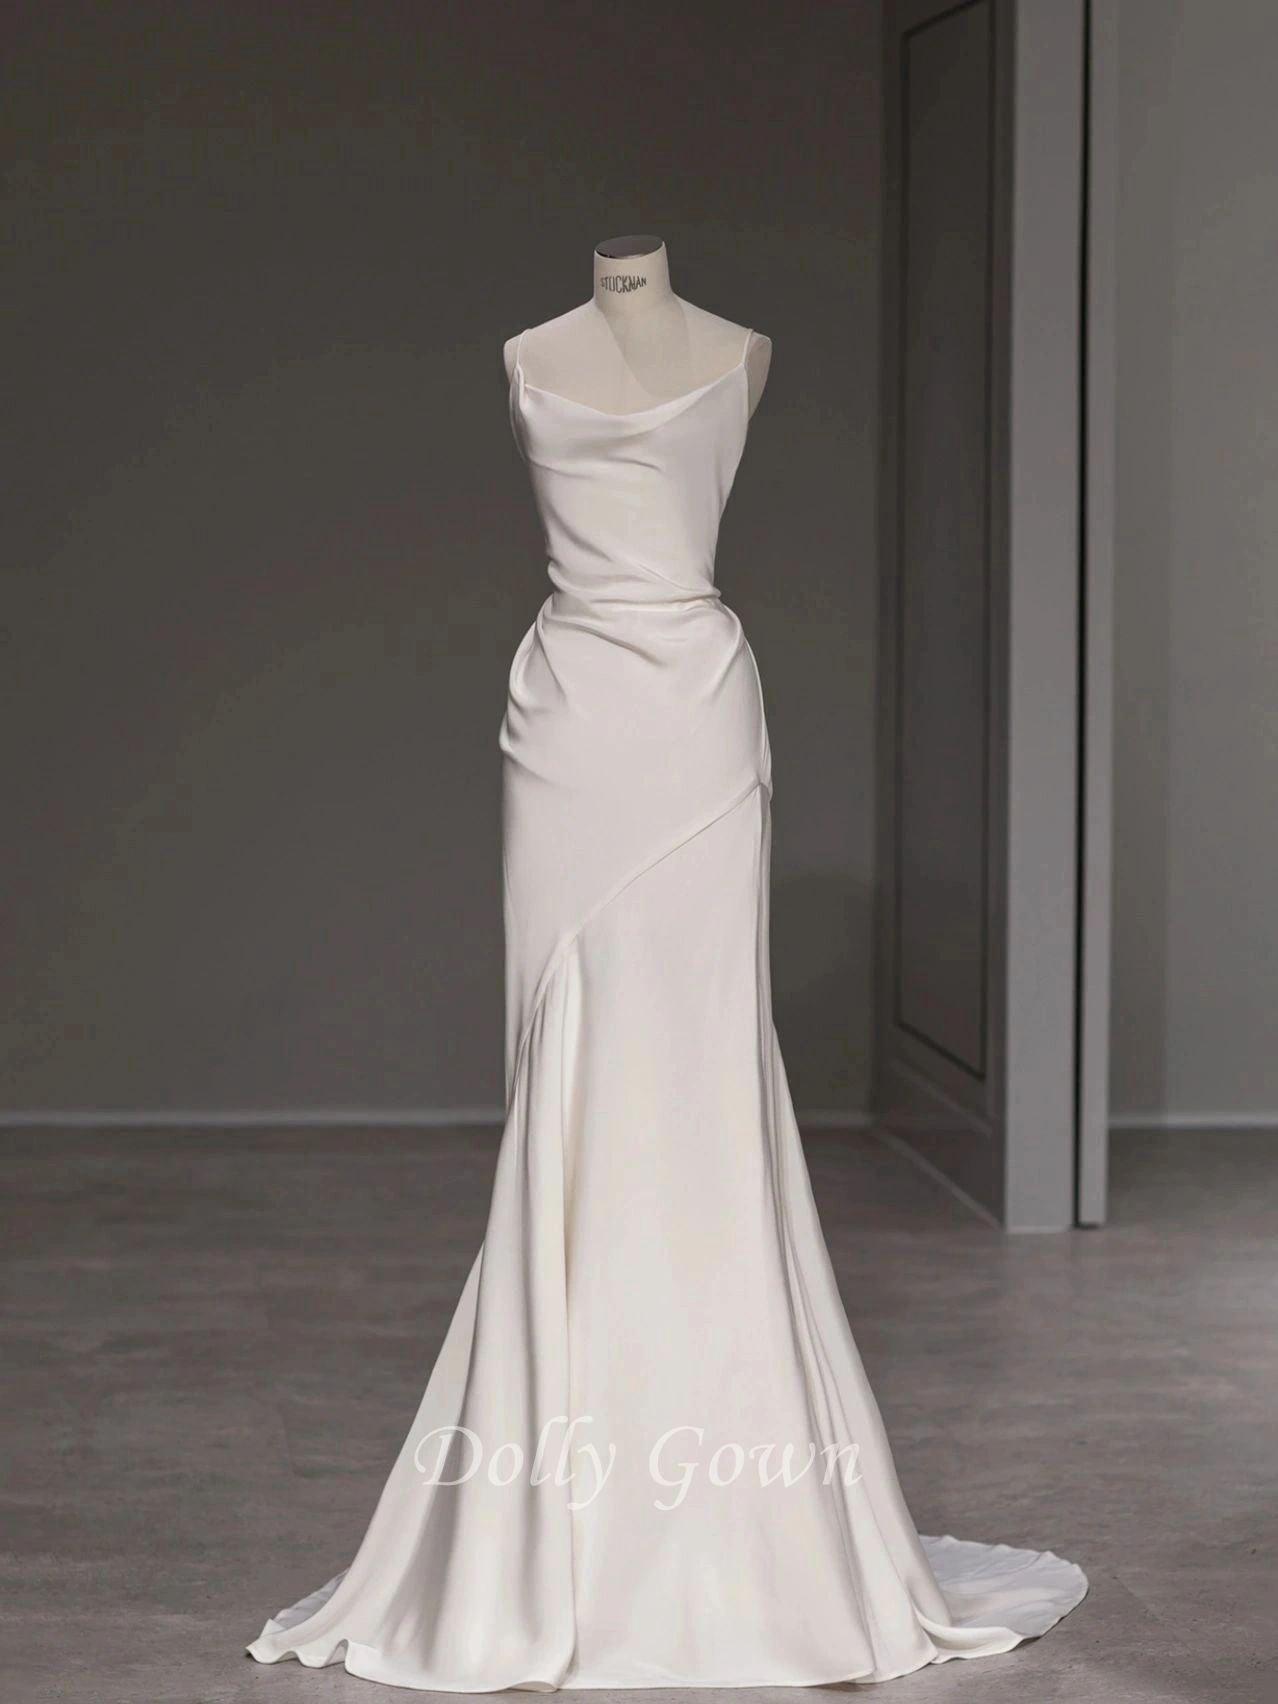 silk dresses for weddings